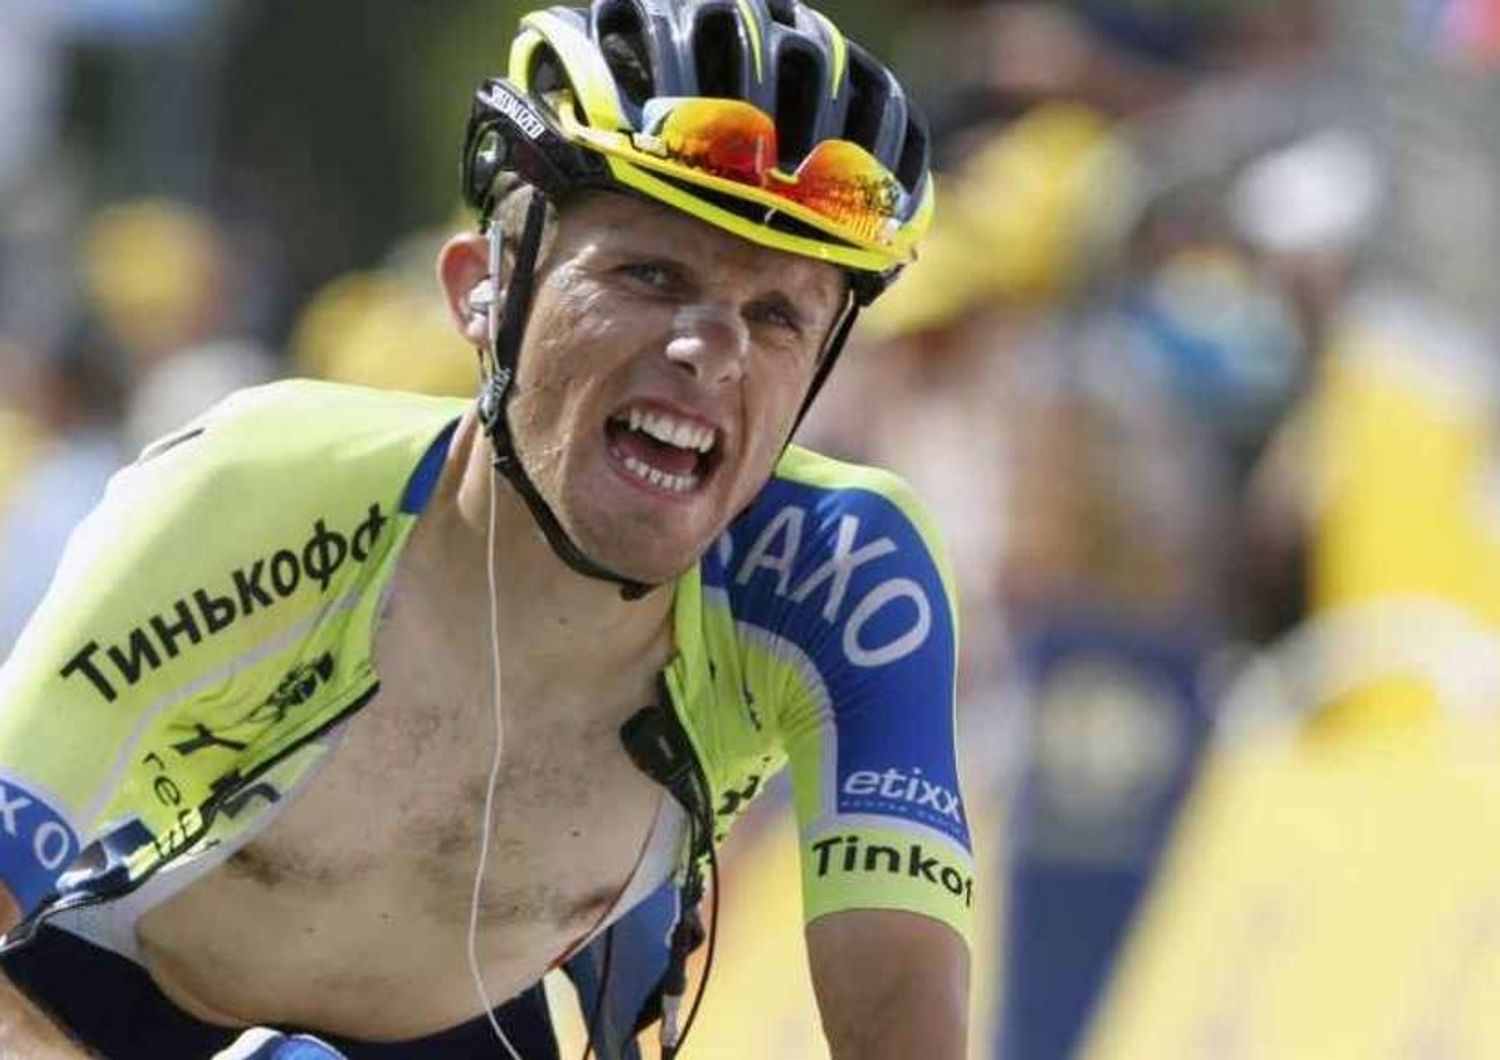 Cycling: Majka wins Tour de France second Alps stage